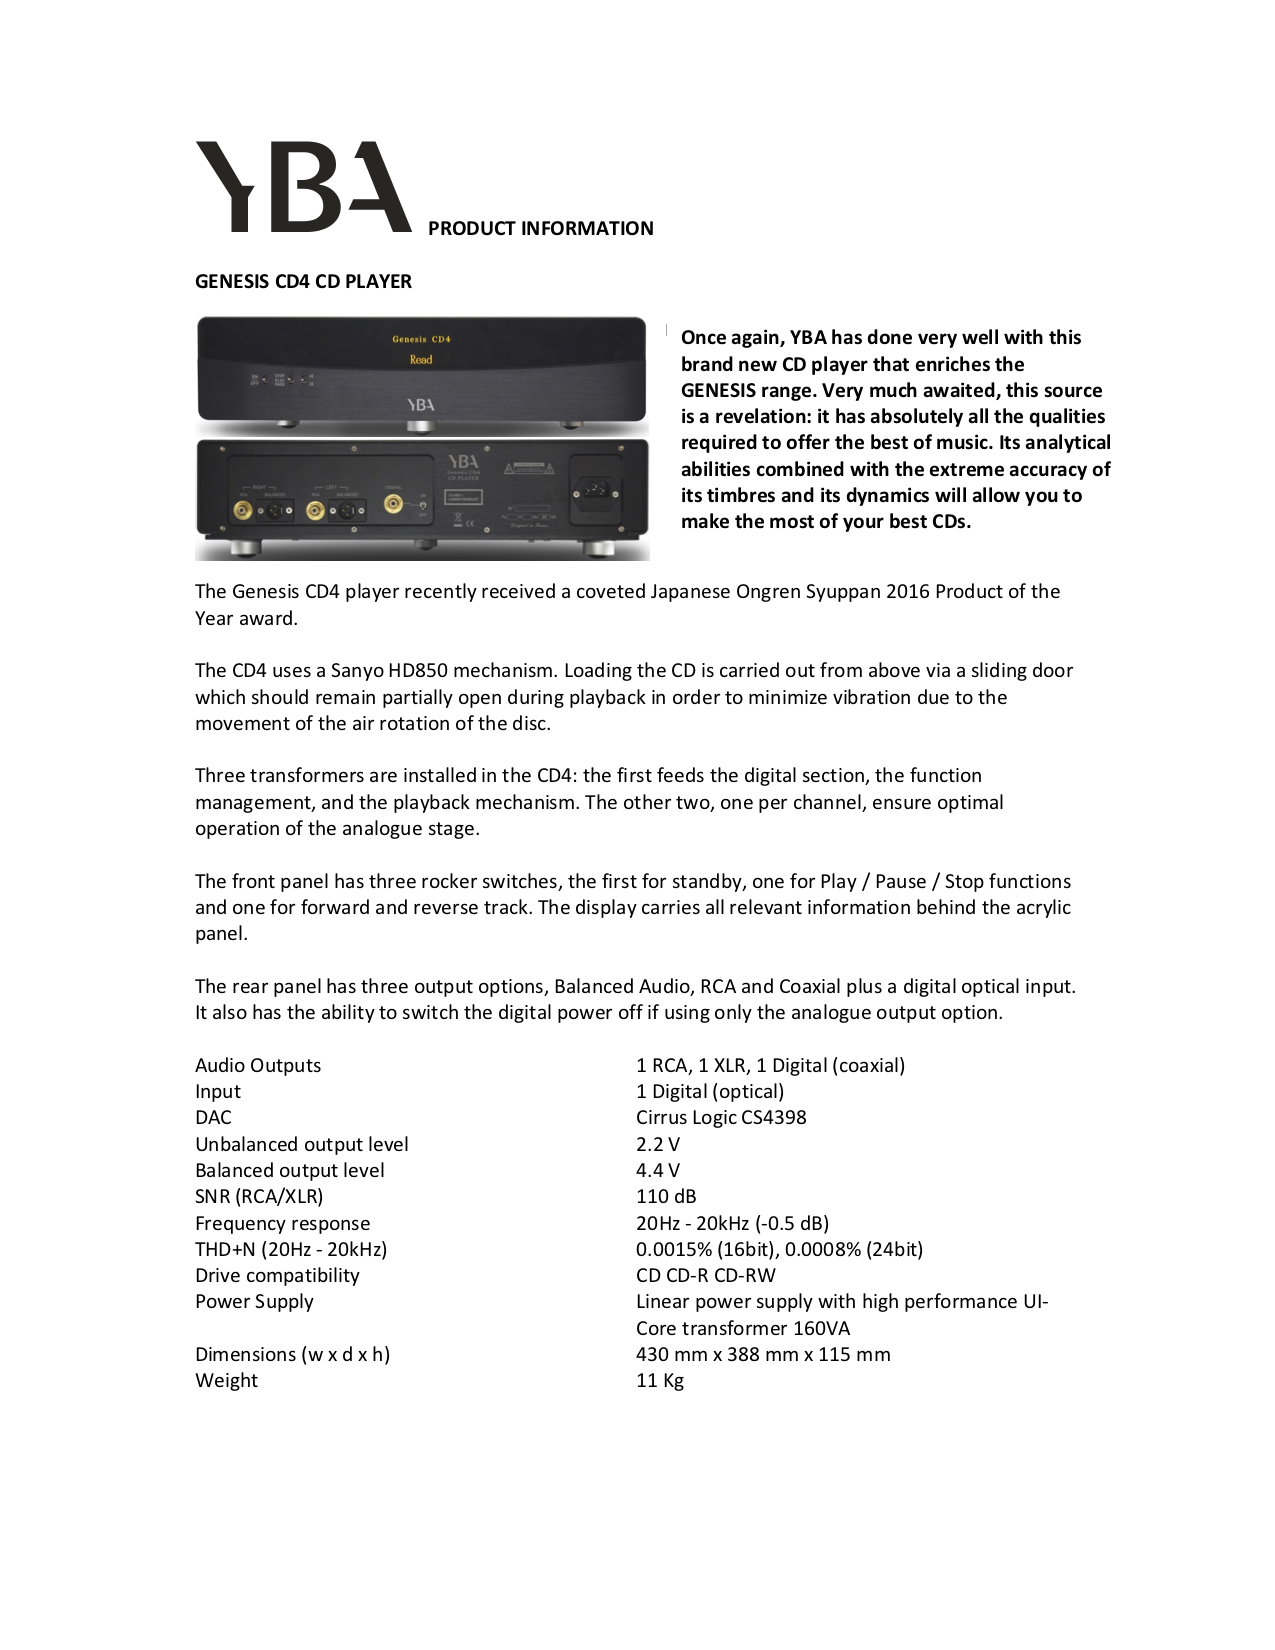 YBA Genesis CD4 Info Sheet - Norman Audio